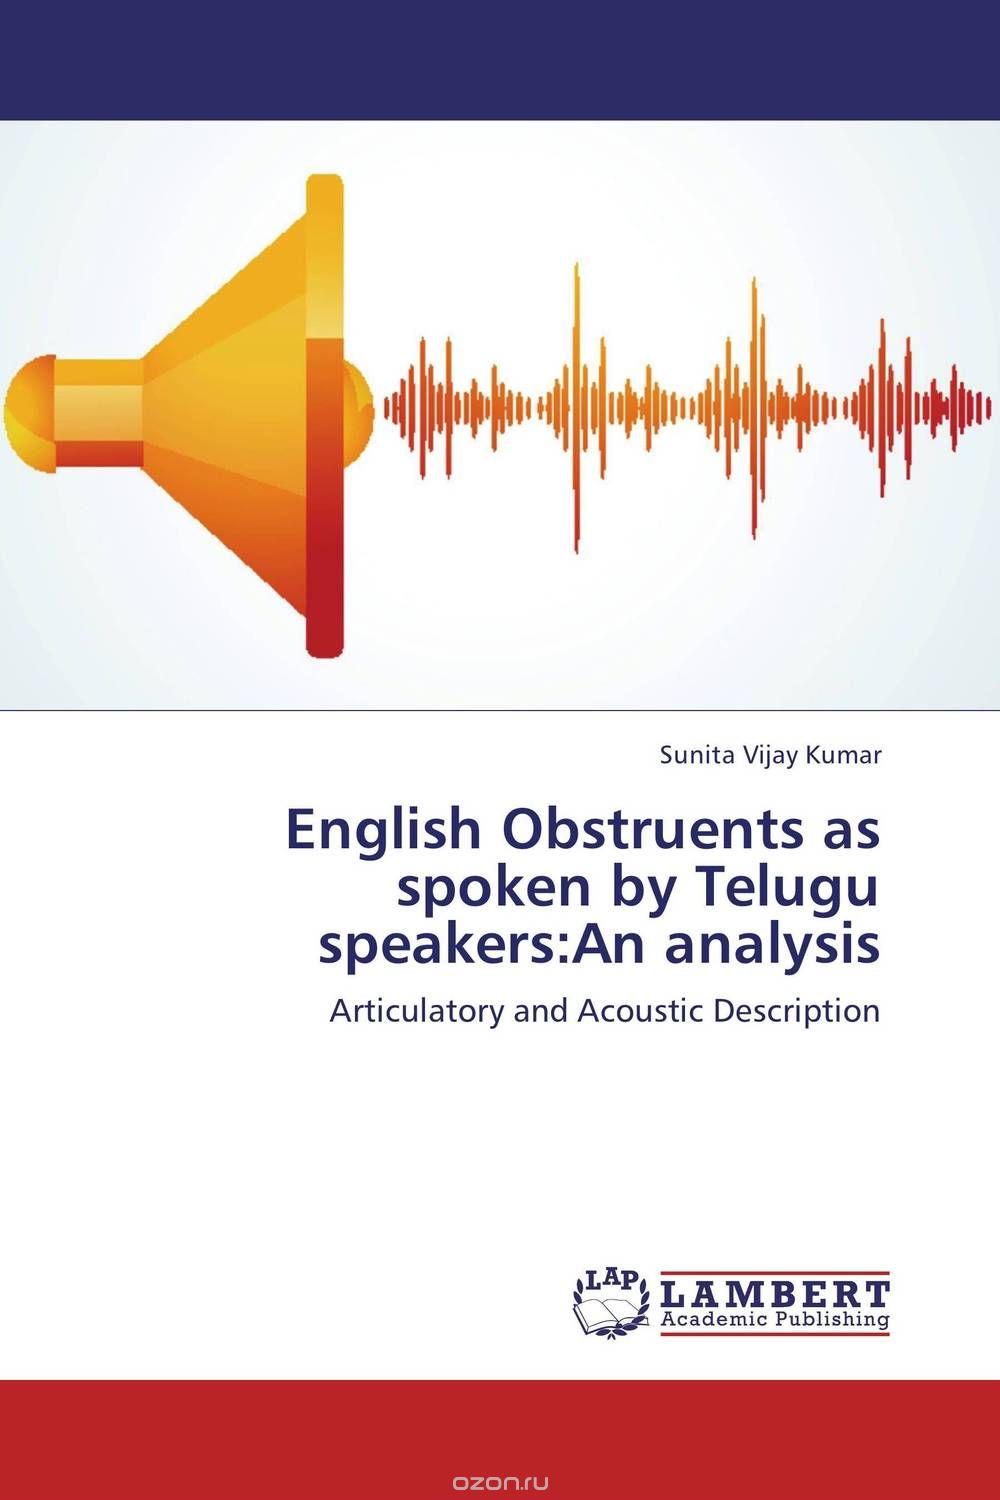 Скачать книгу "English Obstruents as spoken by Telugu speakers:An analysis"